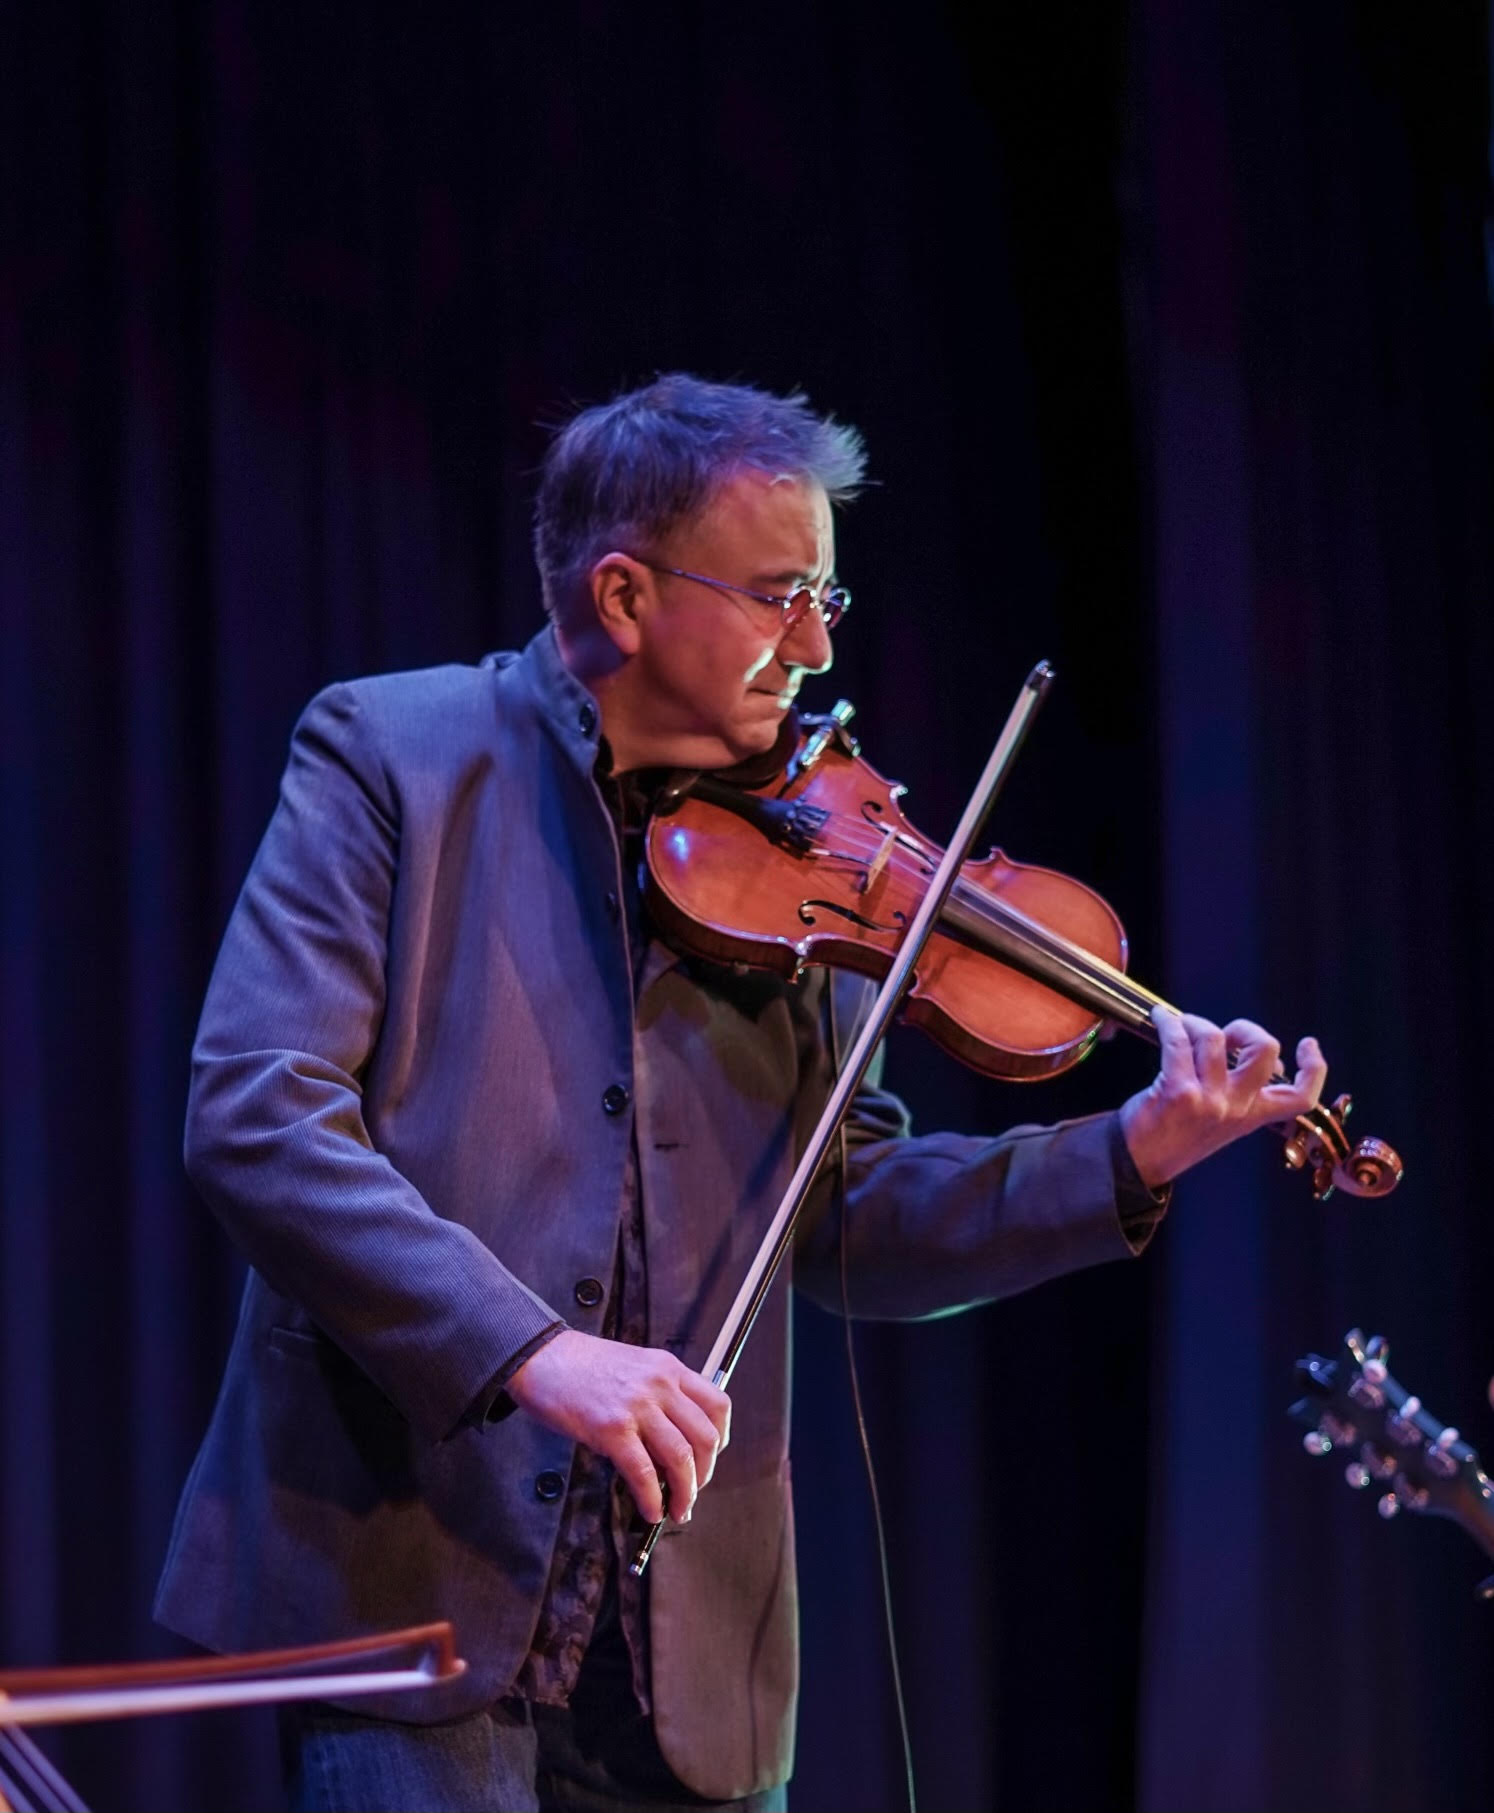 Doug Hamilton playing fiddle, in profile